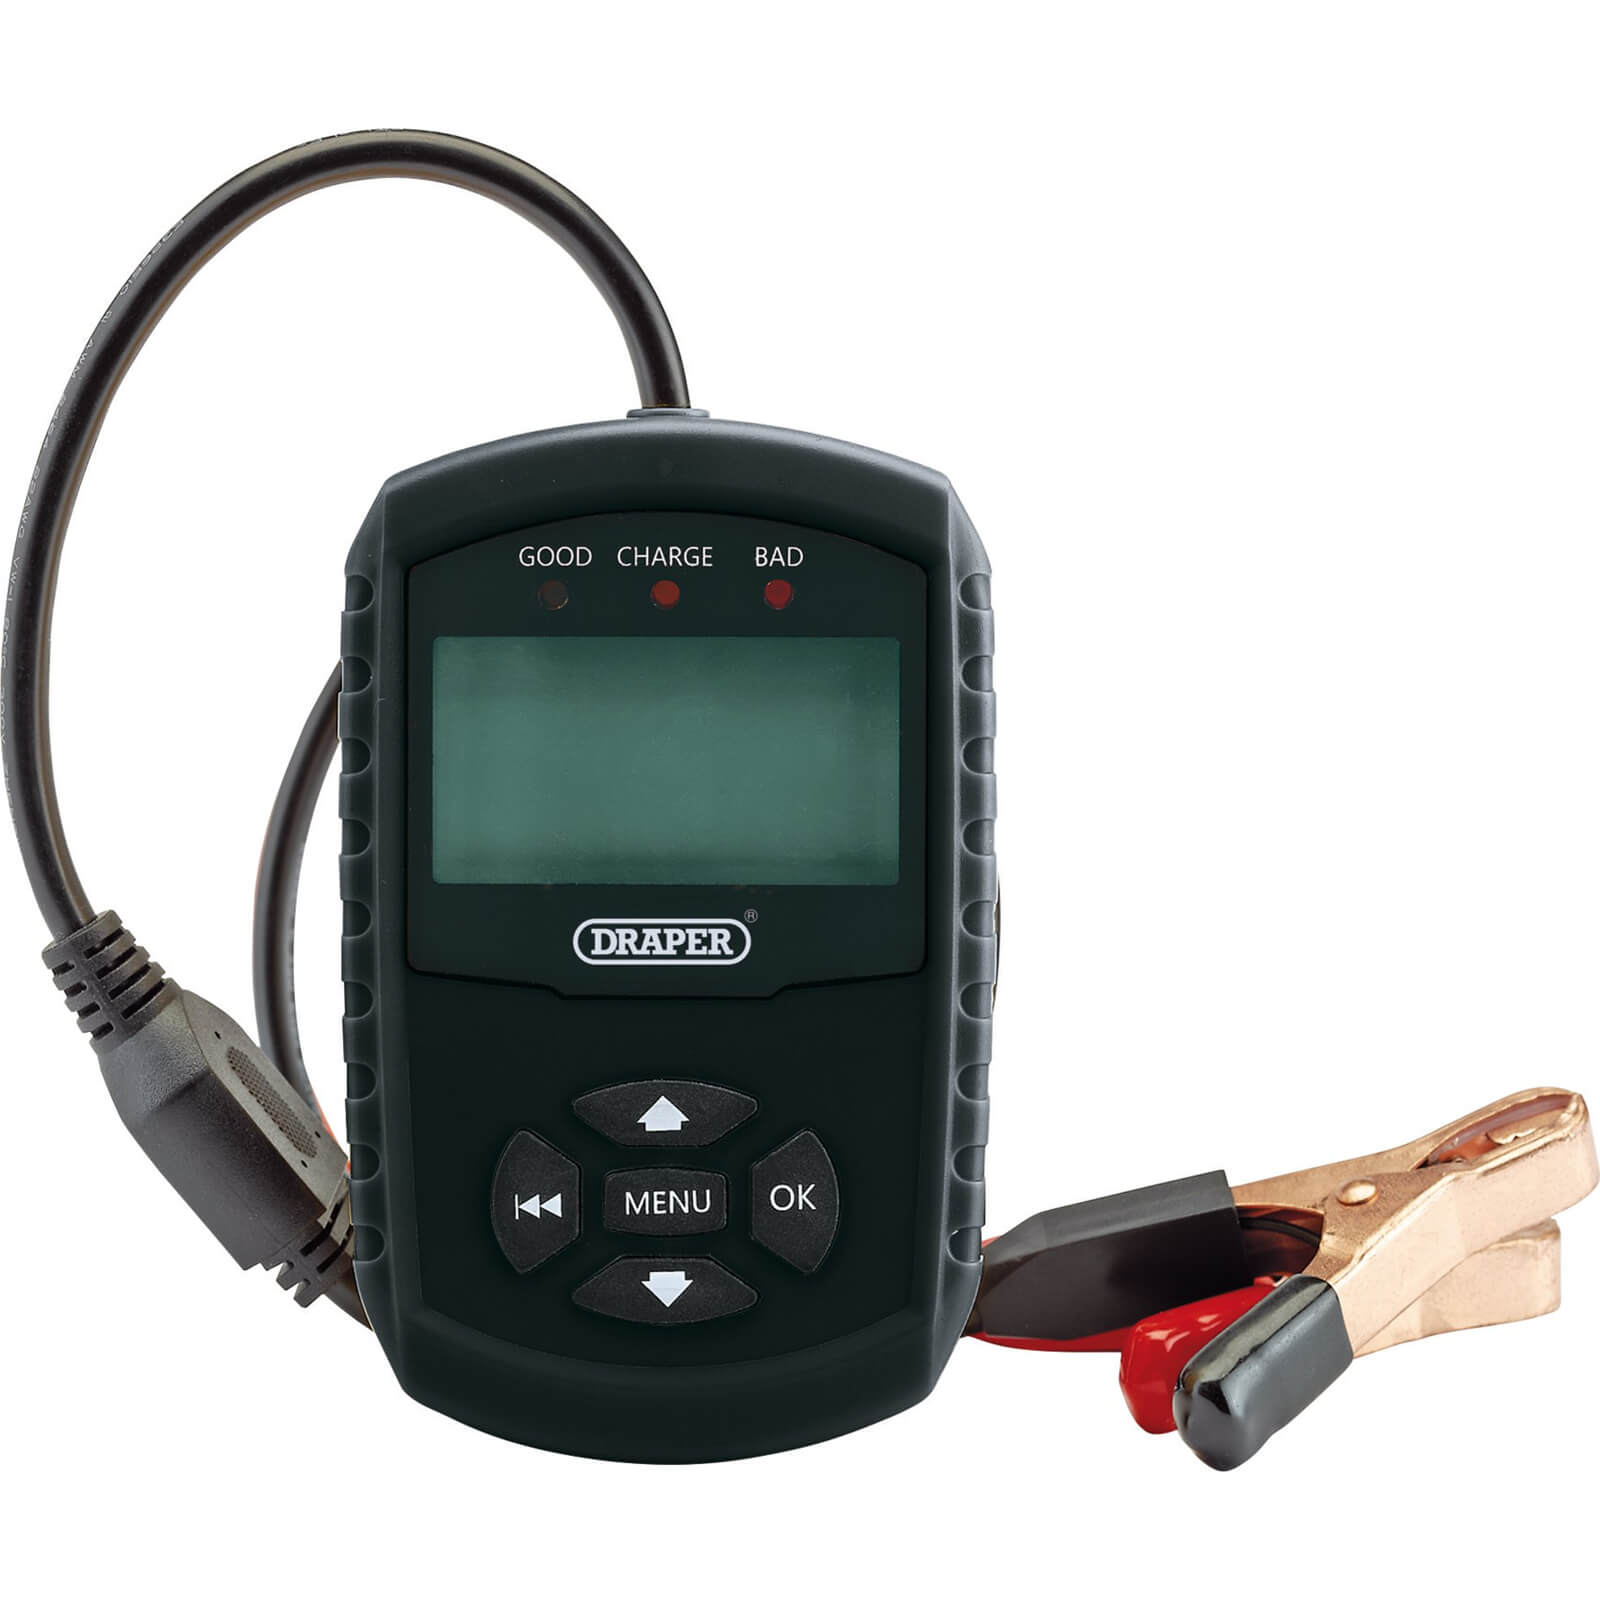 Photo of Draper Bdt/m Battery Diagnostic Tool